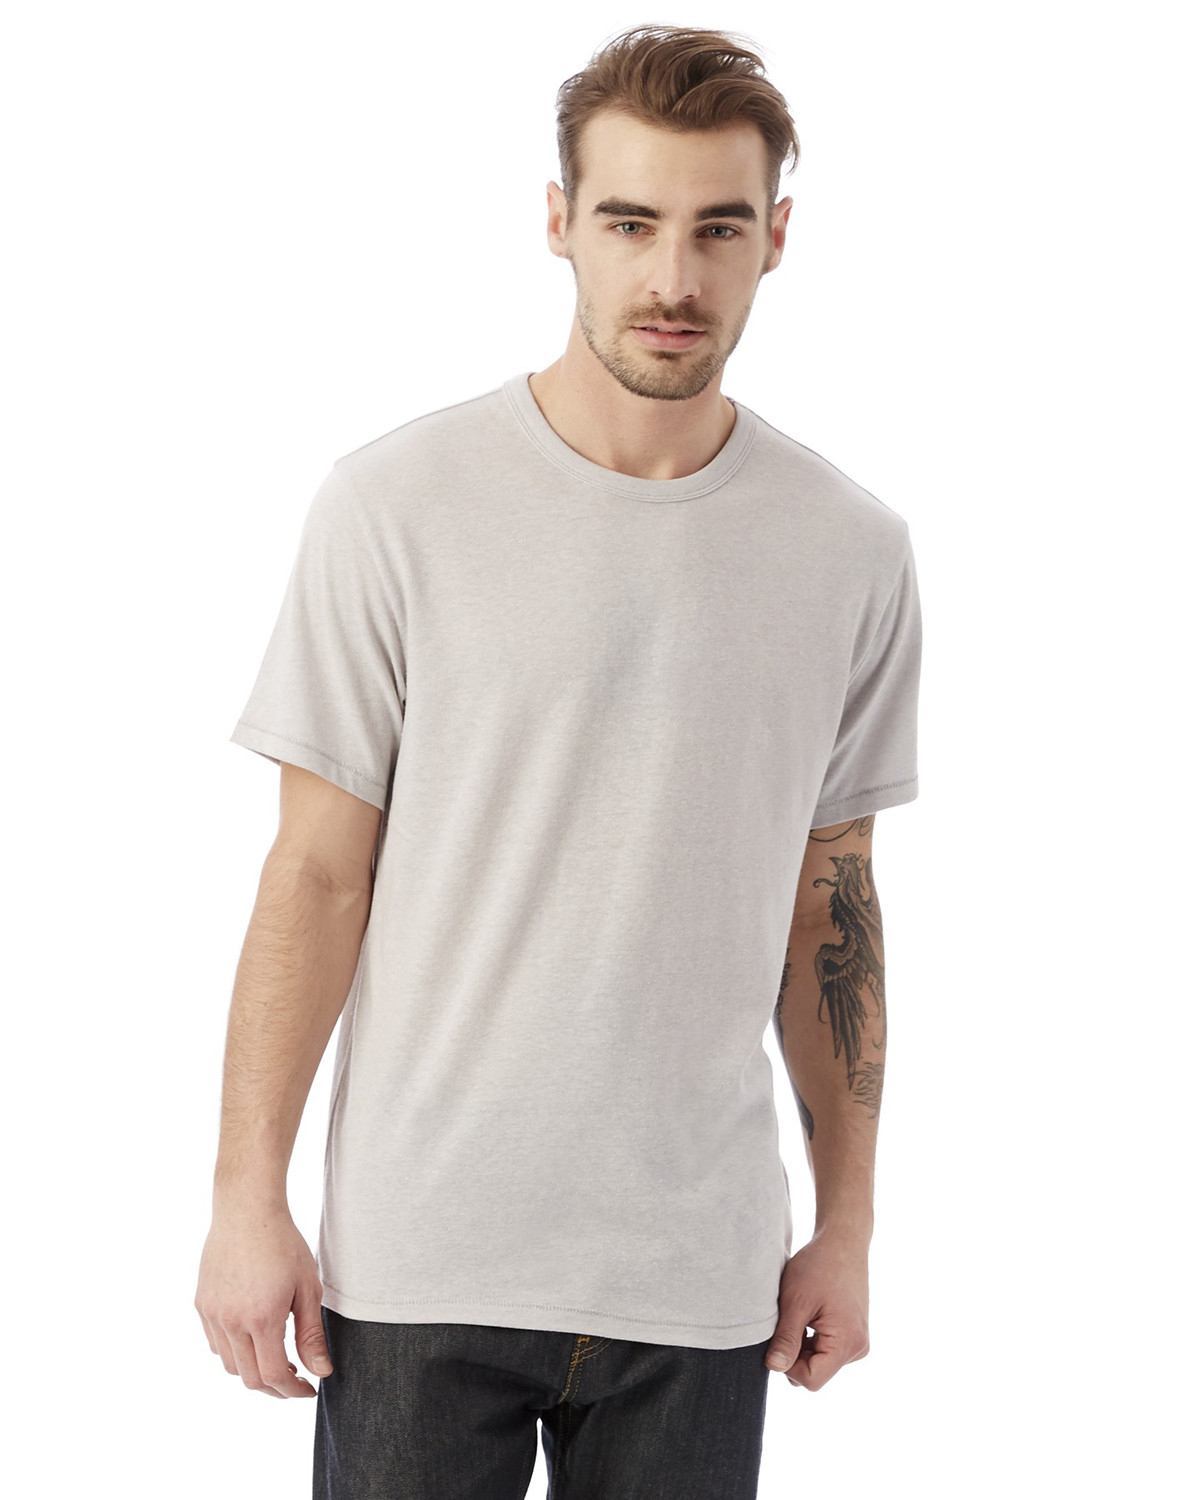 NEW Alternative Mens Vintage 50/50 Jersey Keeper T Shirt 50/50 Tee 5050-05050BP 